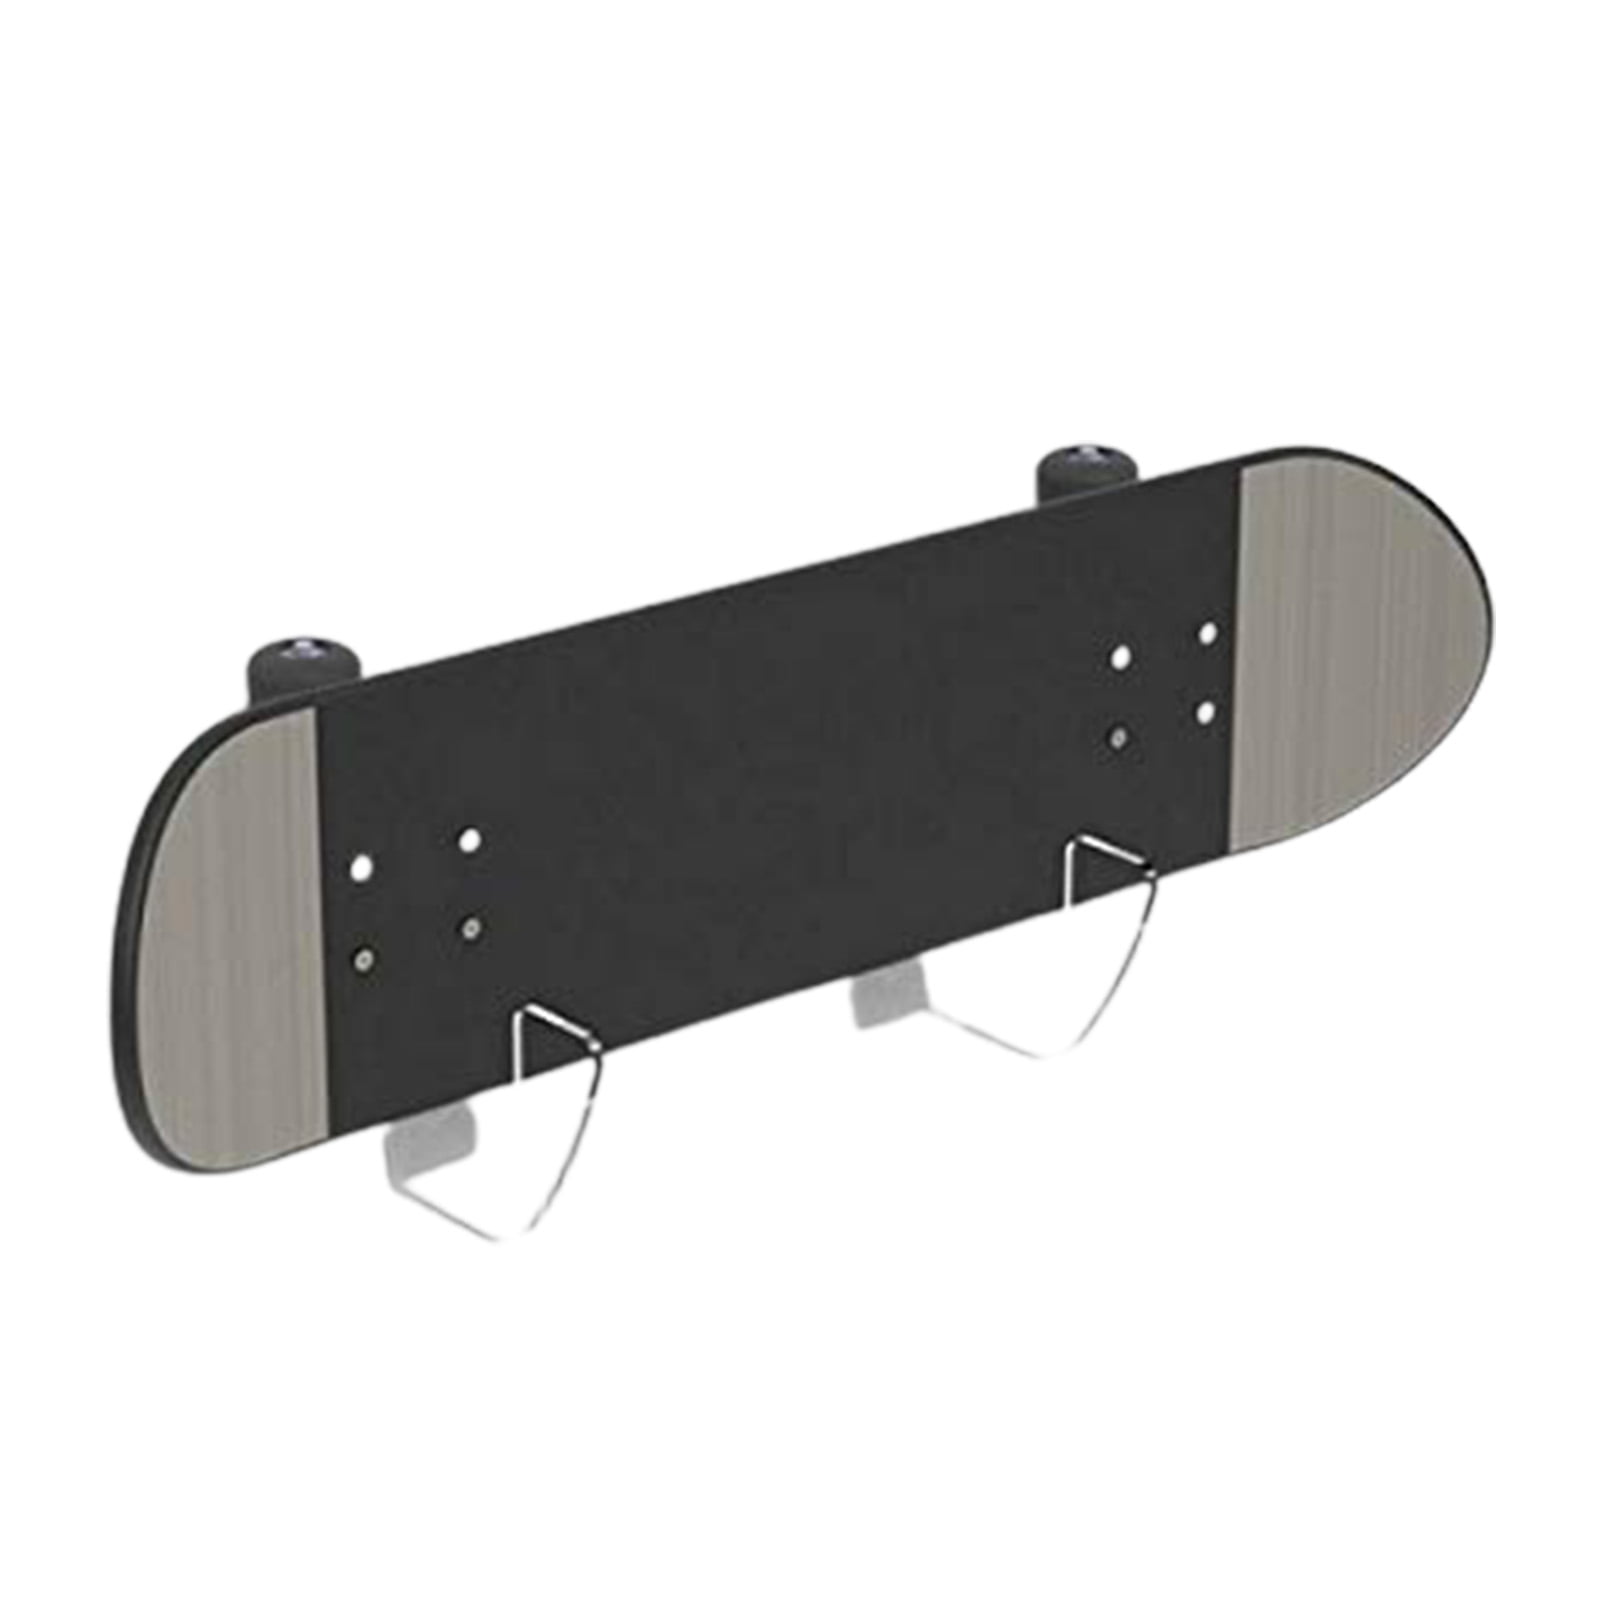 2 Pc Snowboard Skateboard Longboard Hanger Holder Display Storage Wall Mount New 